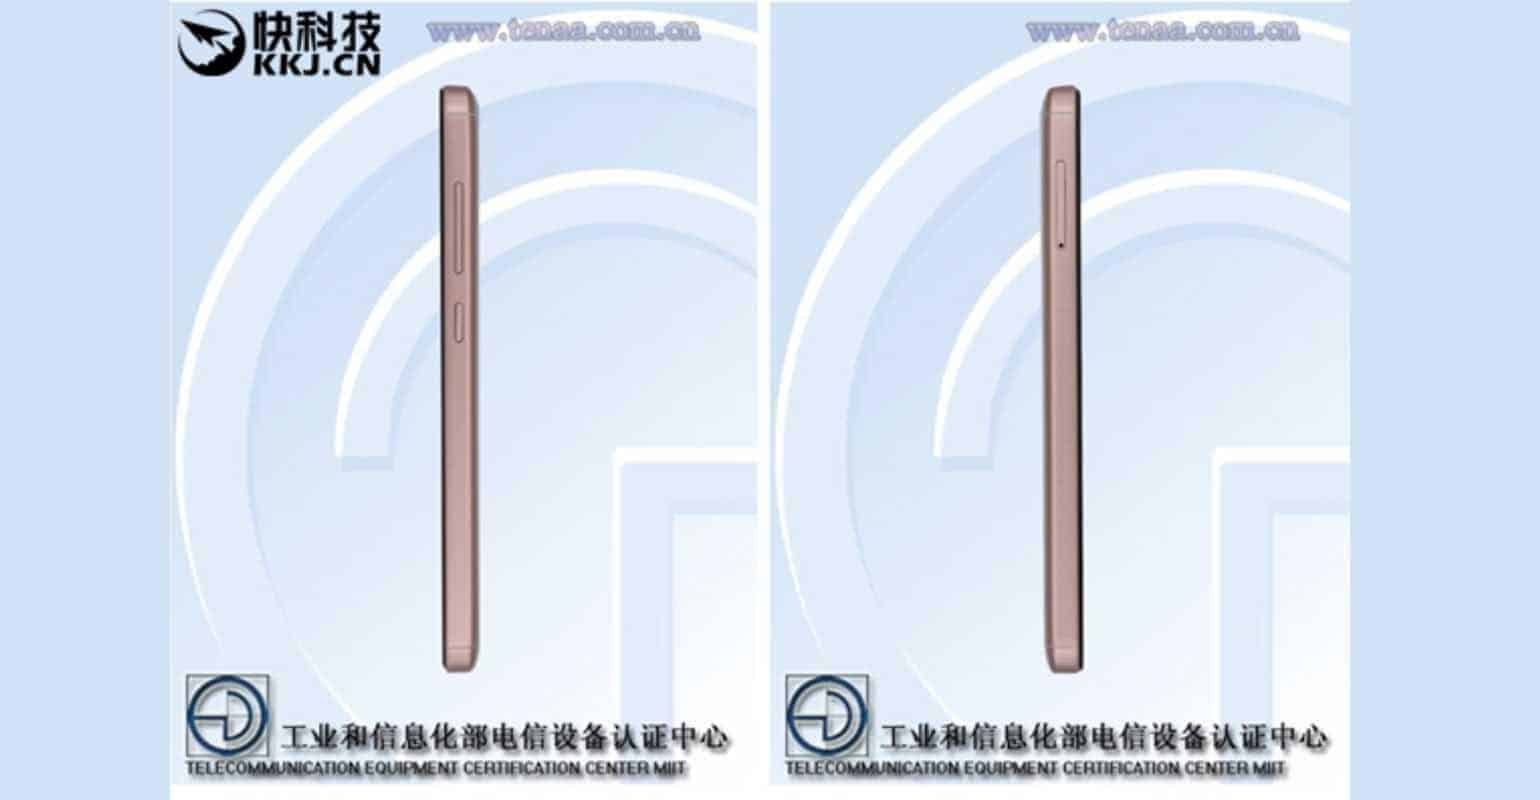 TENAA screenshot van de zijkant van de Xiaomi Redmi 4A